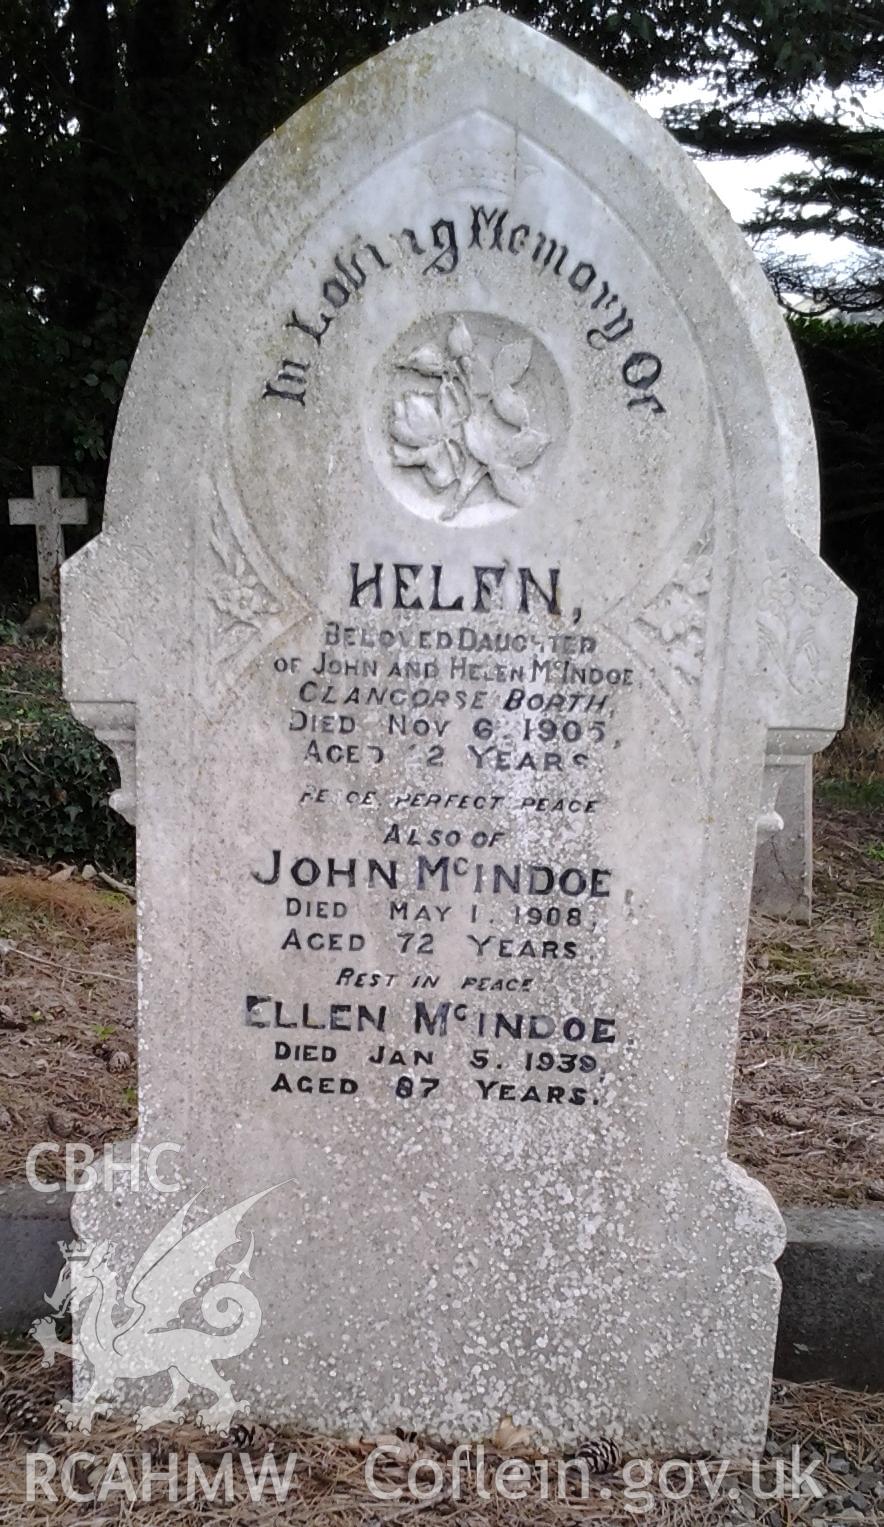 Memorial to Helen McIndoe of Glangorse, Borth (died Nov 6 1906, aged 2) and her parents John and Ellen McIndoe